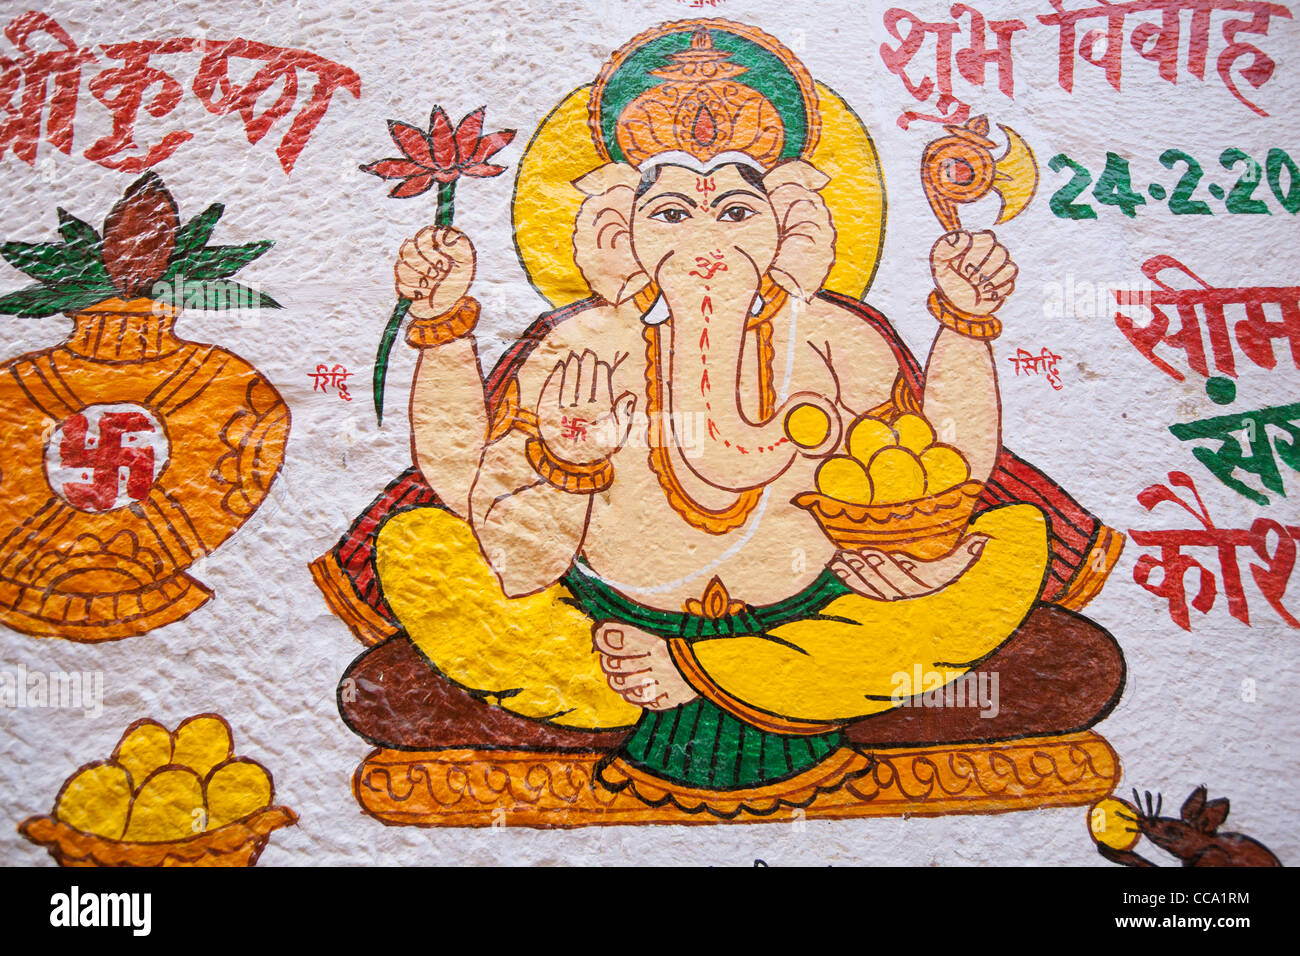 Wall inside Jaisalmer Fort showing depiction of the Hindu elephant god Ganesha, in Rajasthan, India. Stock Photo